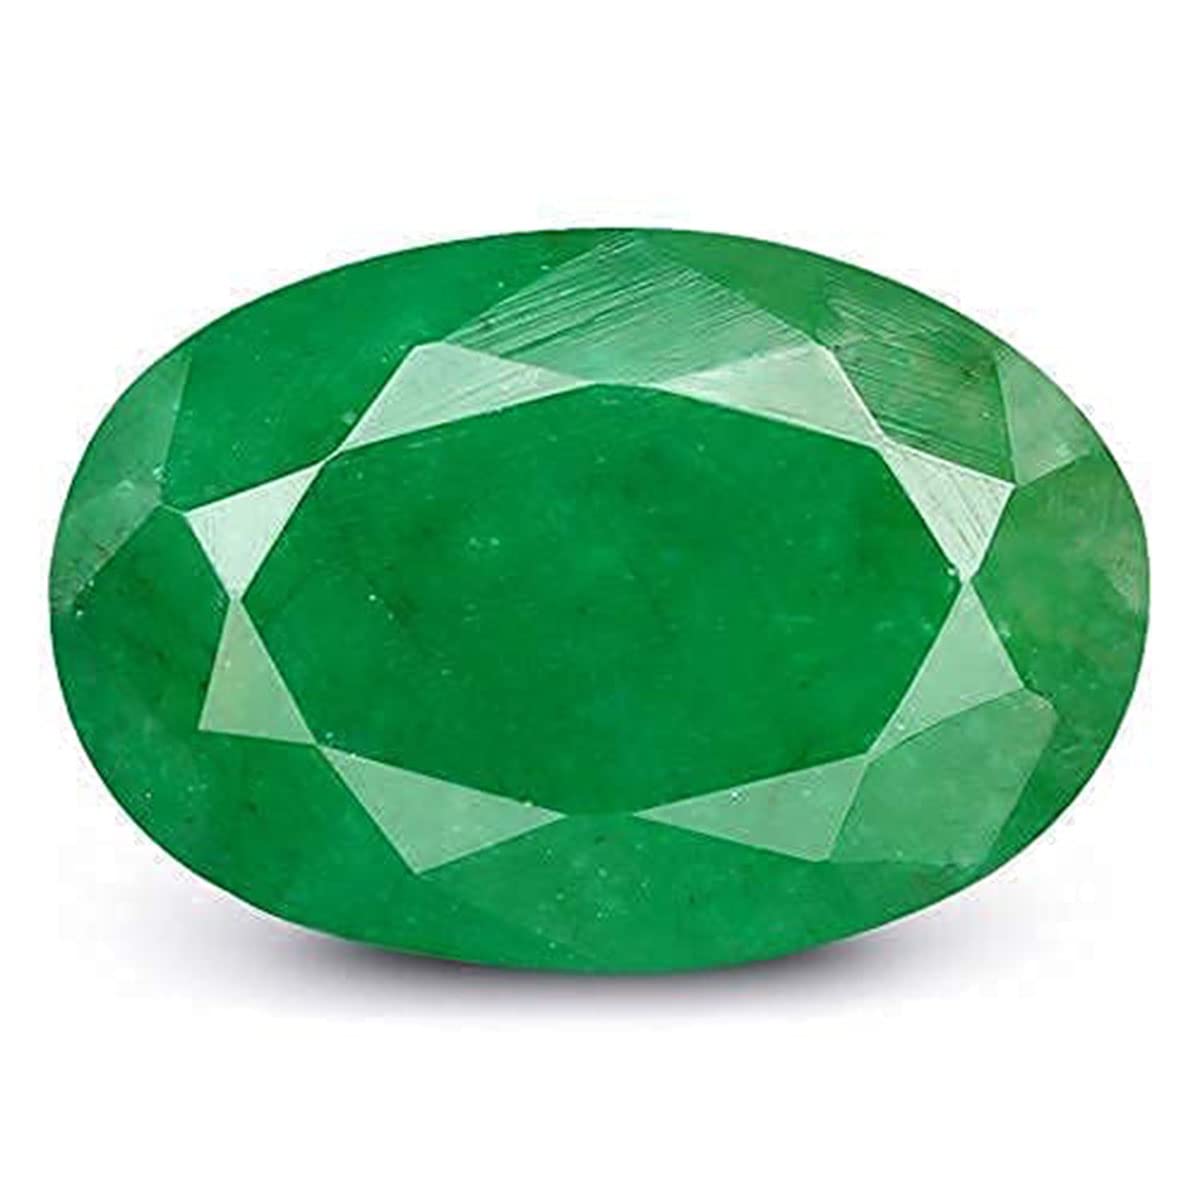 Oval-shaped emerald gemstone